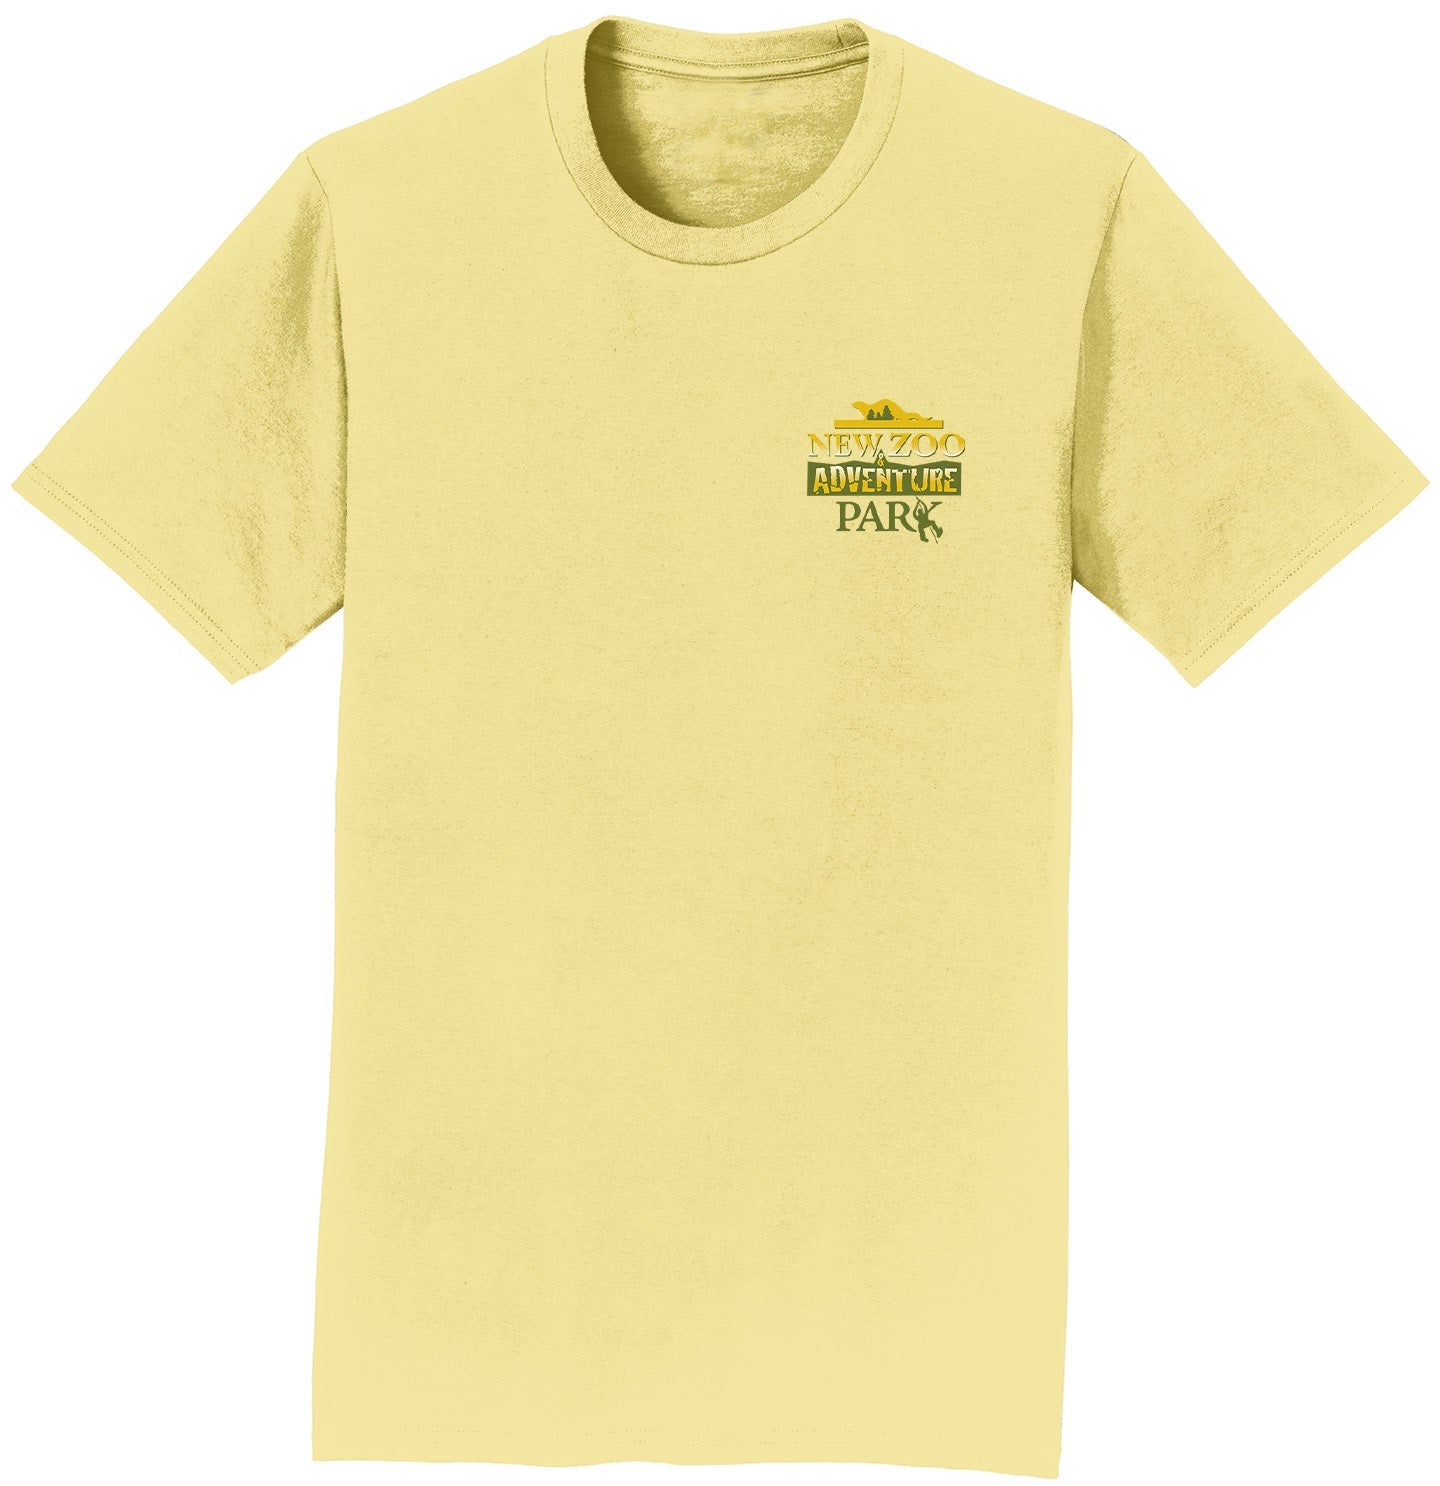 NEW Zoo and Adventure Park Pocket Logo - Adult Unisex T-Shirt